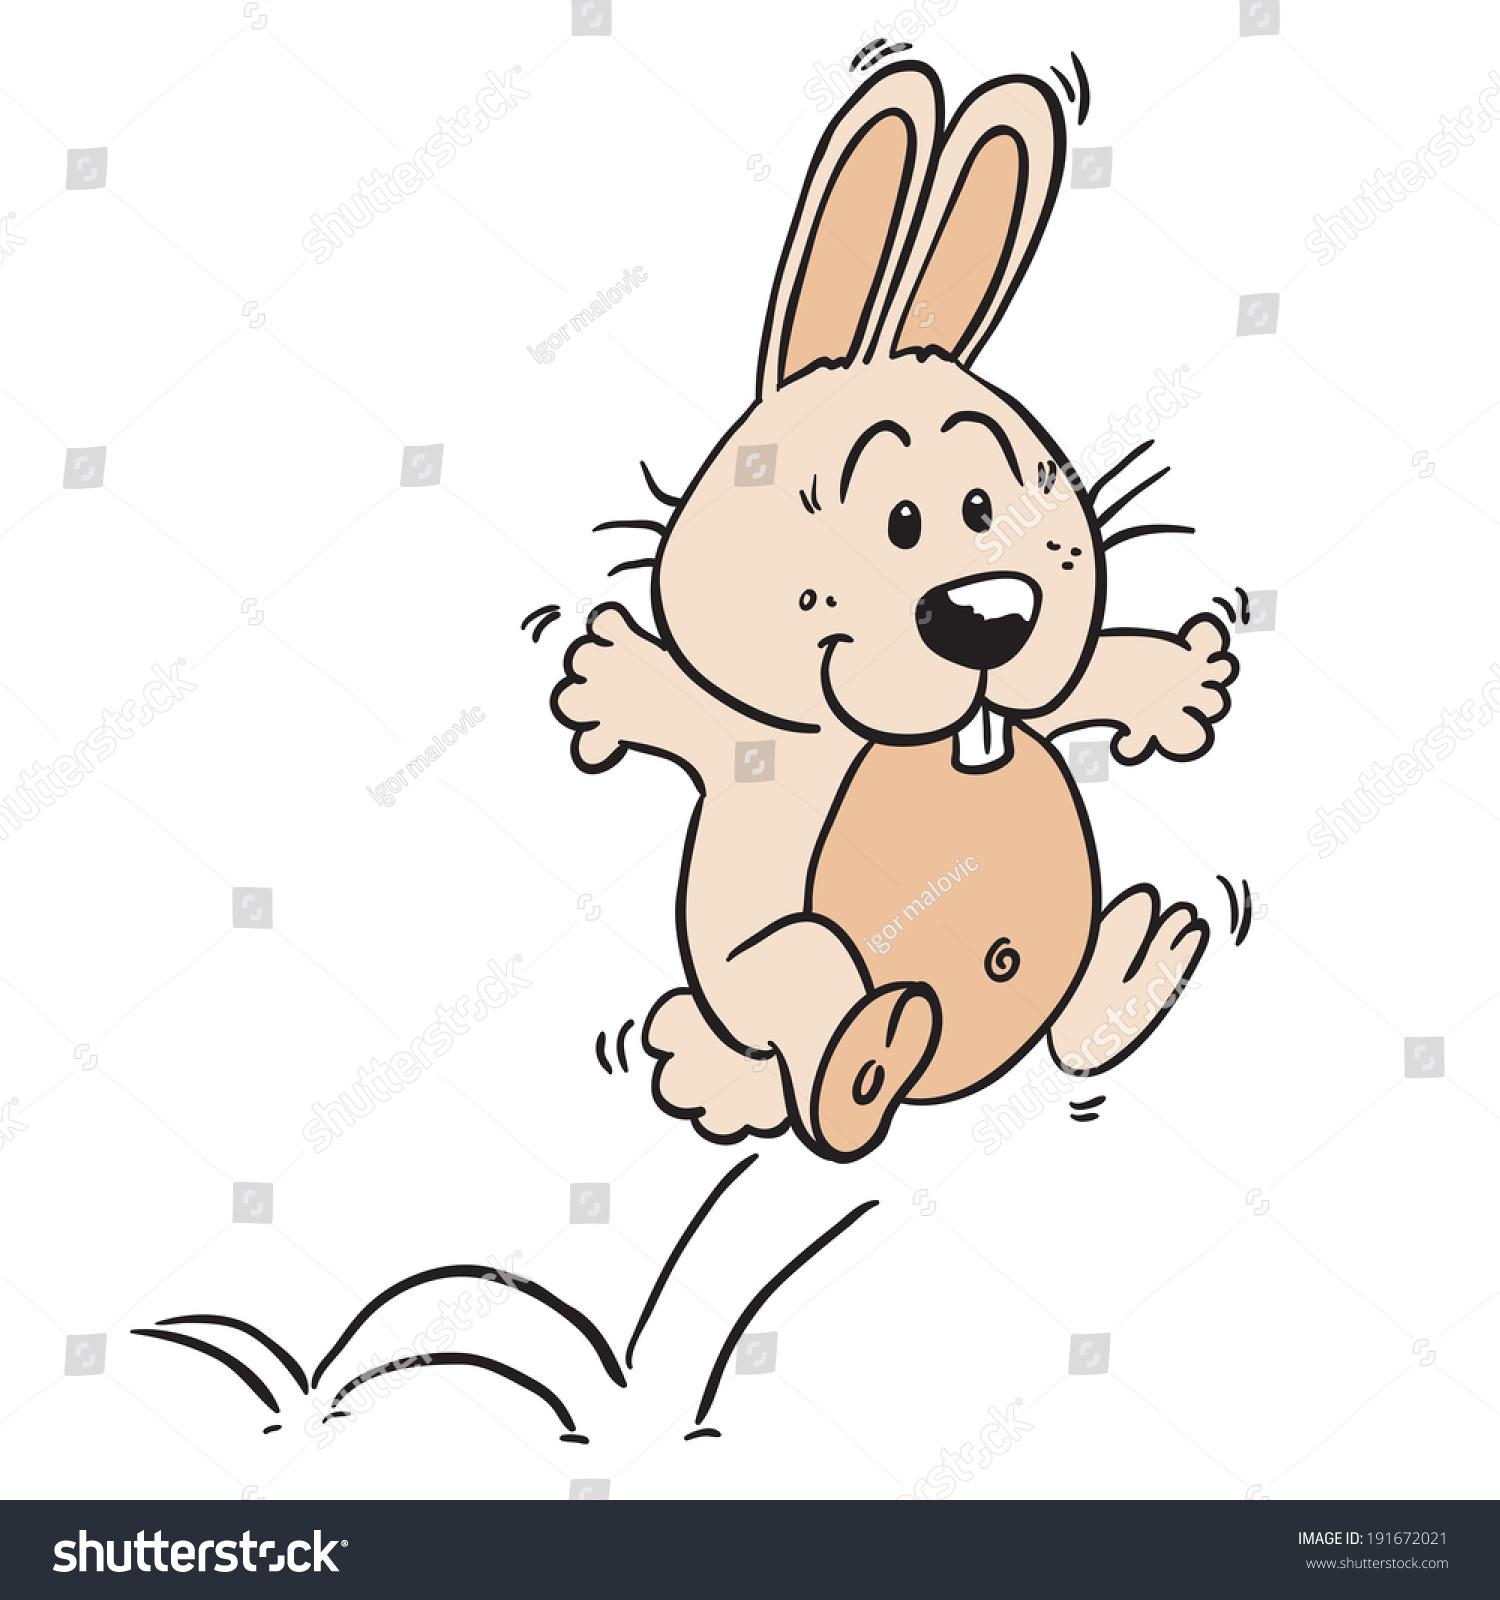 Jumping Rabbit Cartoon Illustration illustrazione stock 191672021